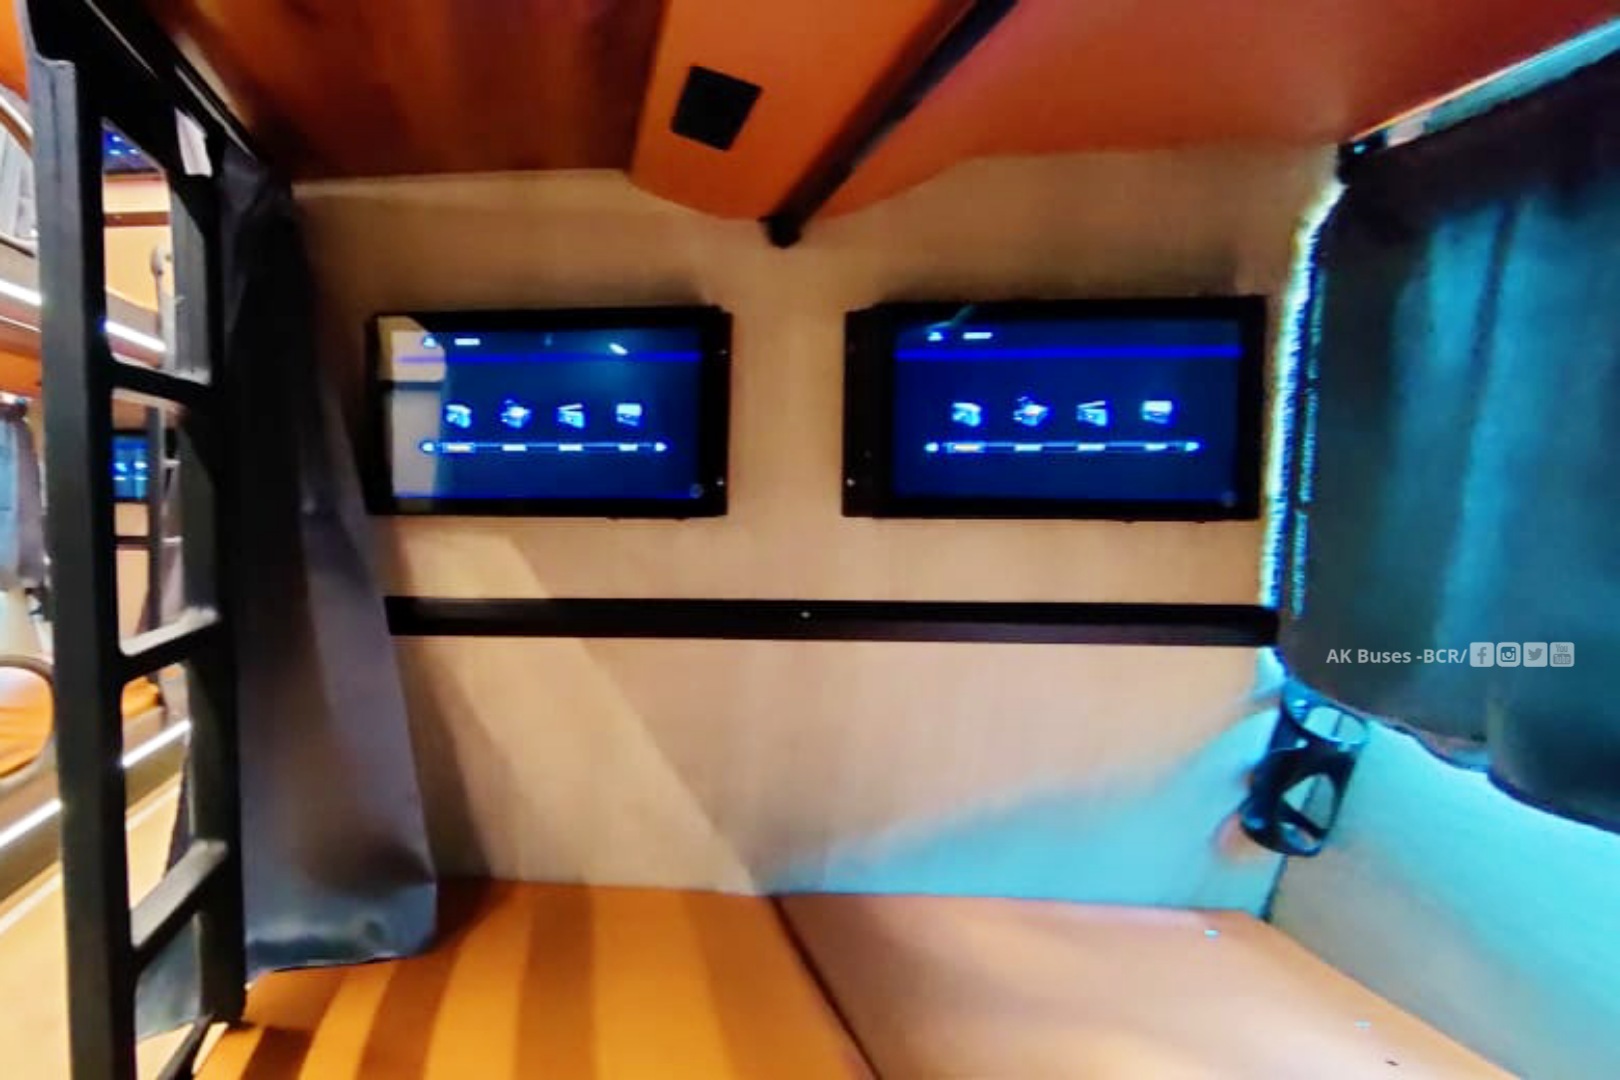 cg connect travels premium ac sleeper bus interior